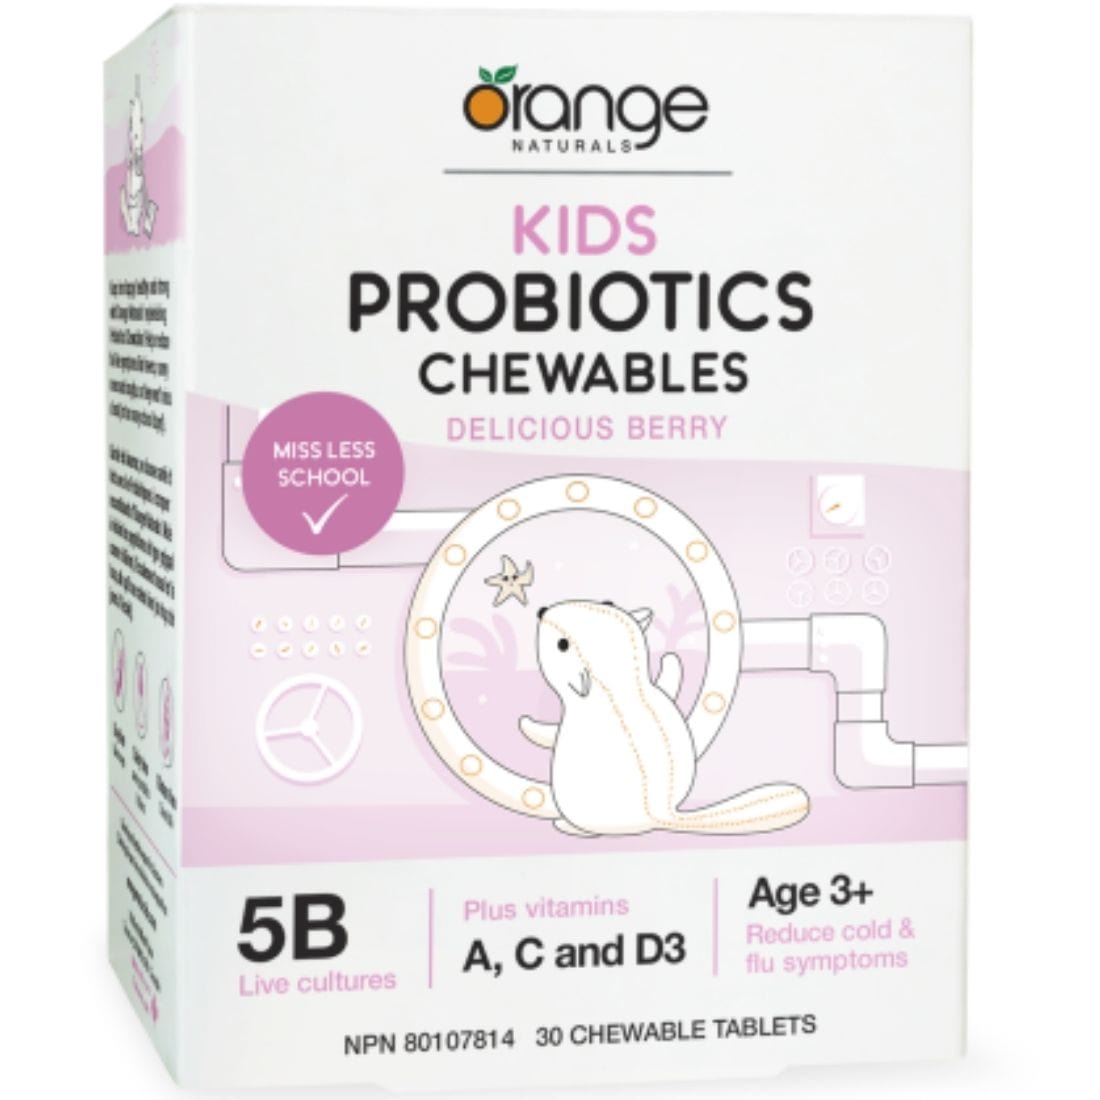 Orange Naturals Kids Probiotics Chewables - Delicious Berry